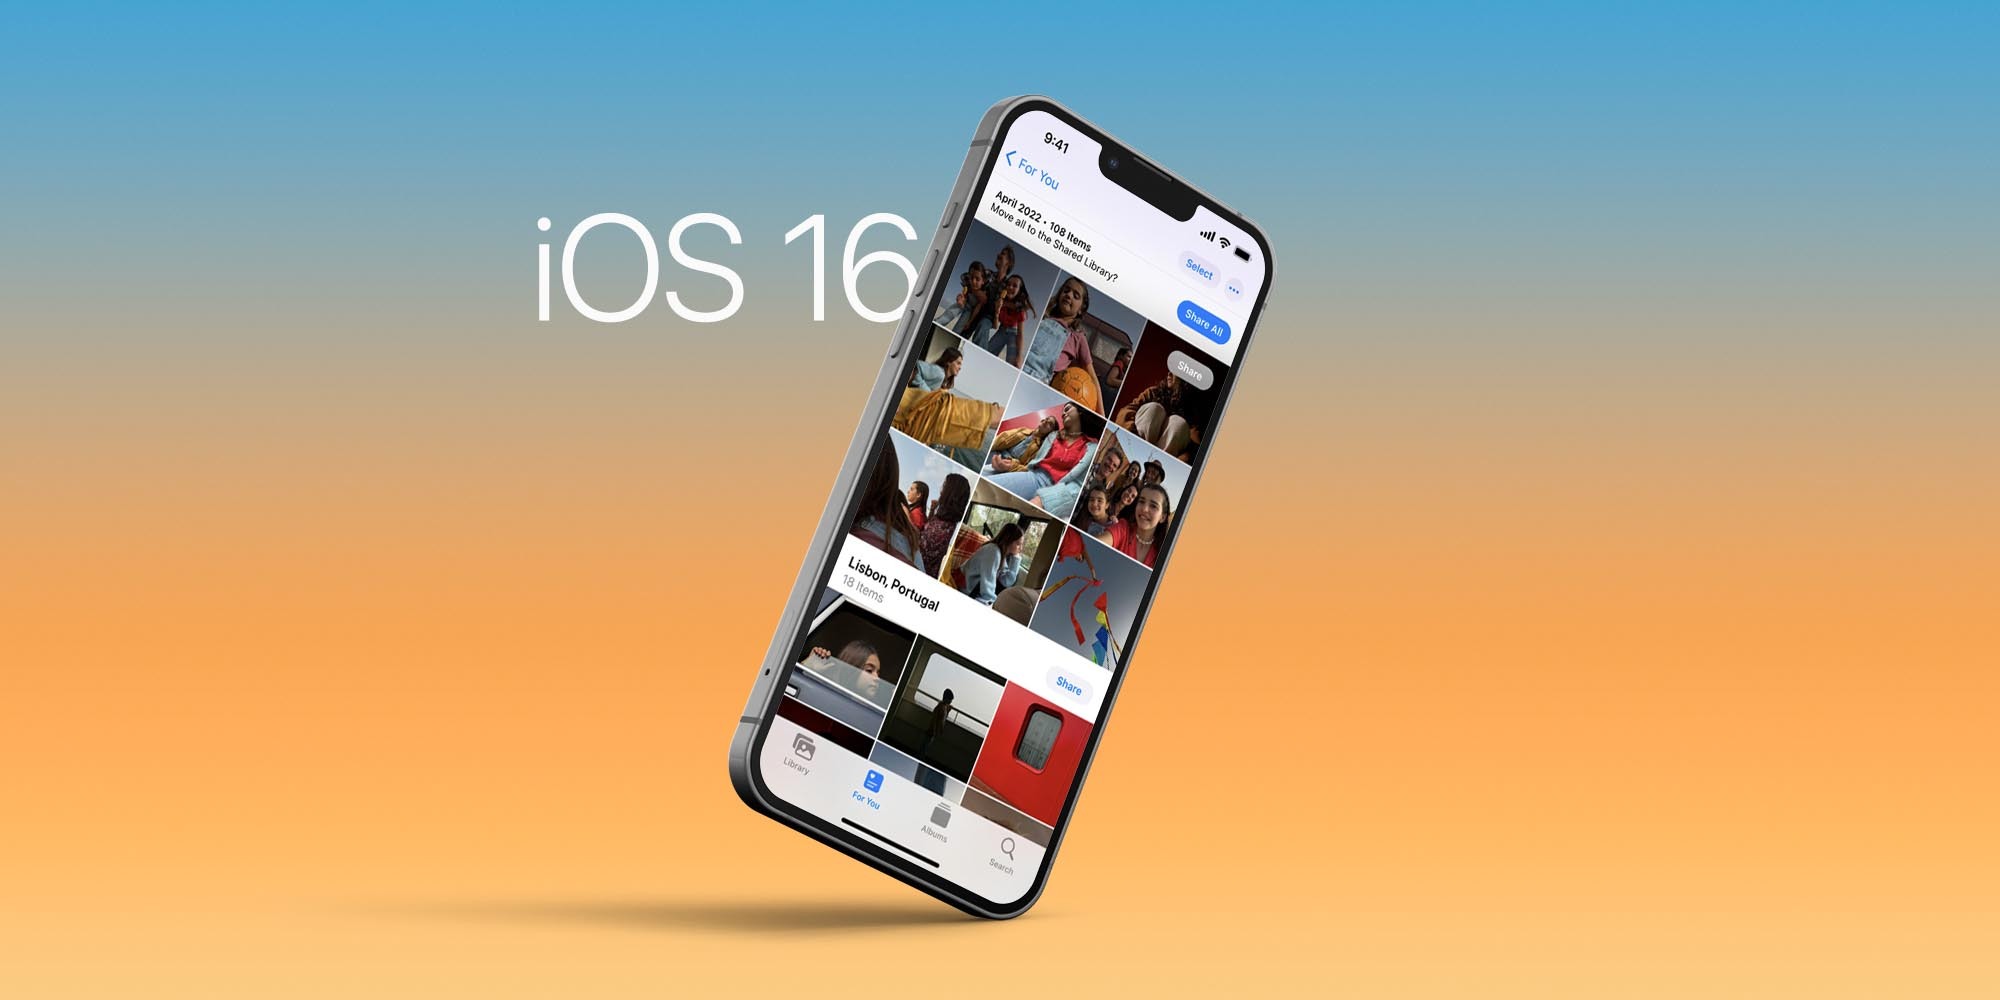 Lock your hidden photos album with iOS 16